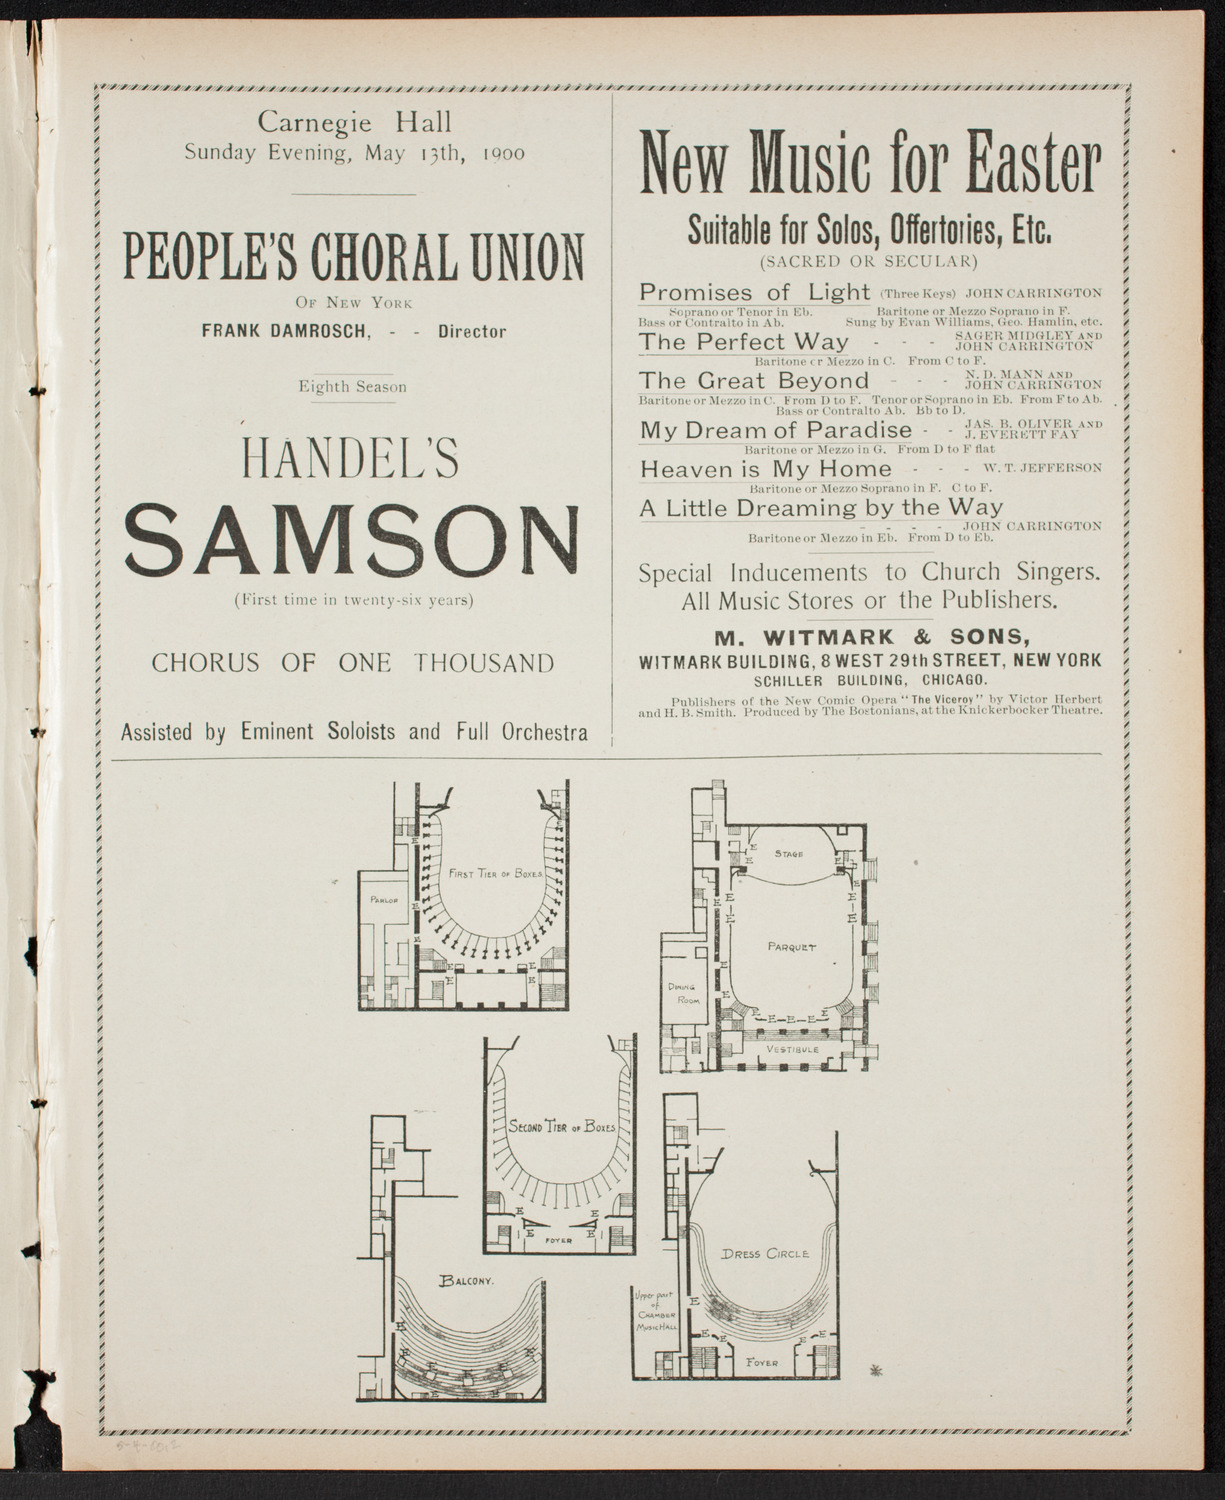 Amicitia Orchestral Club, May 4, 1900, program page 3